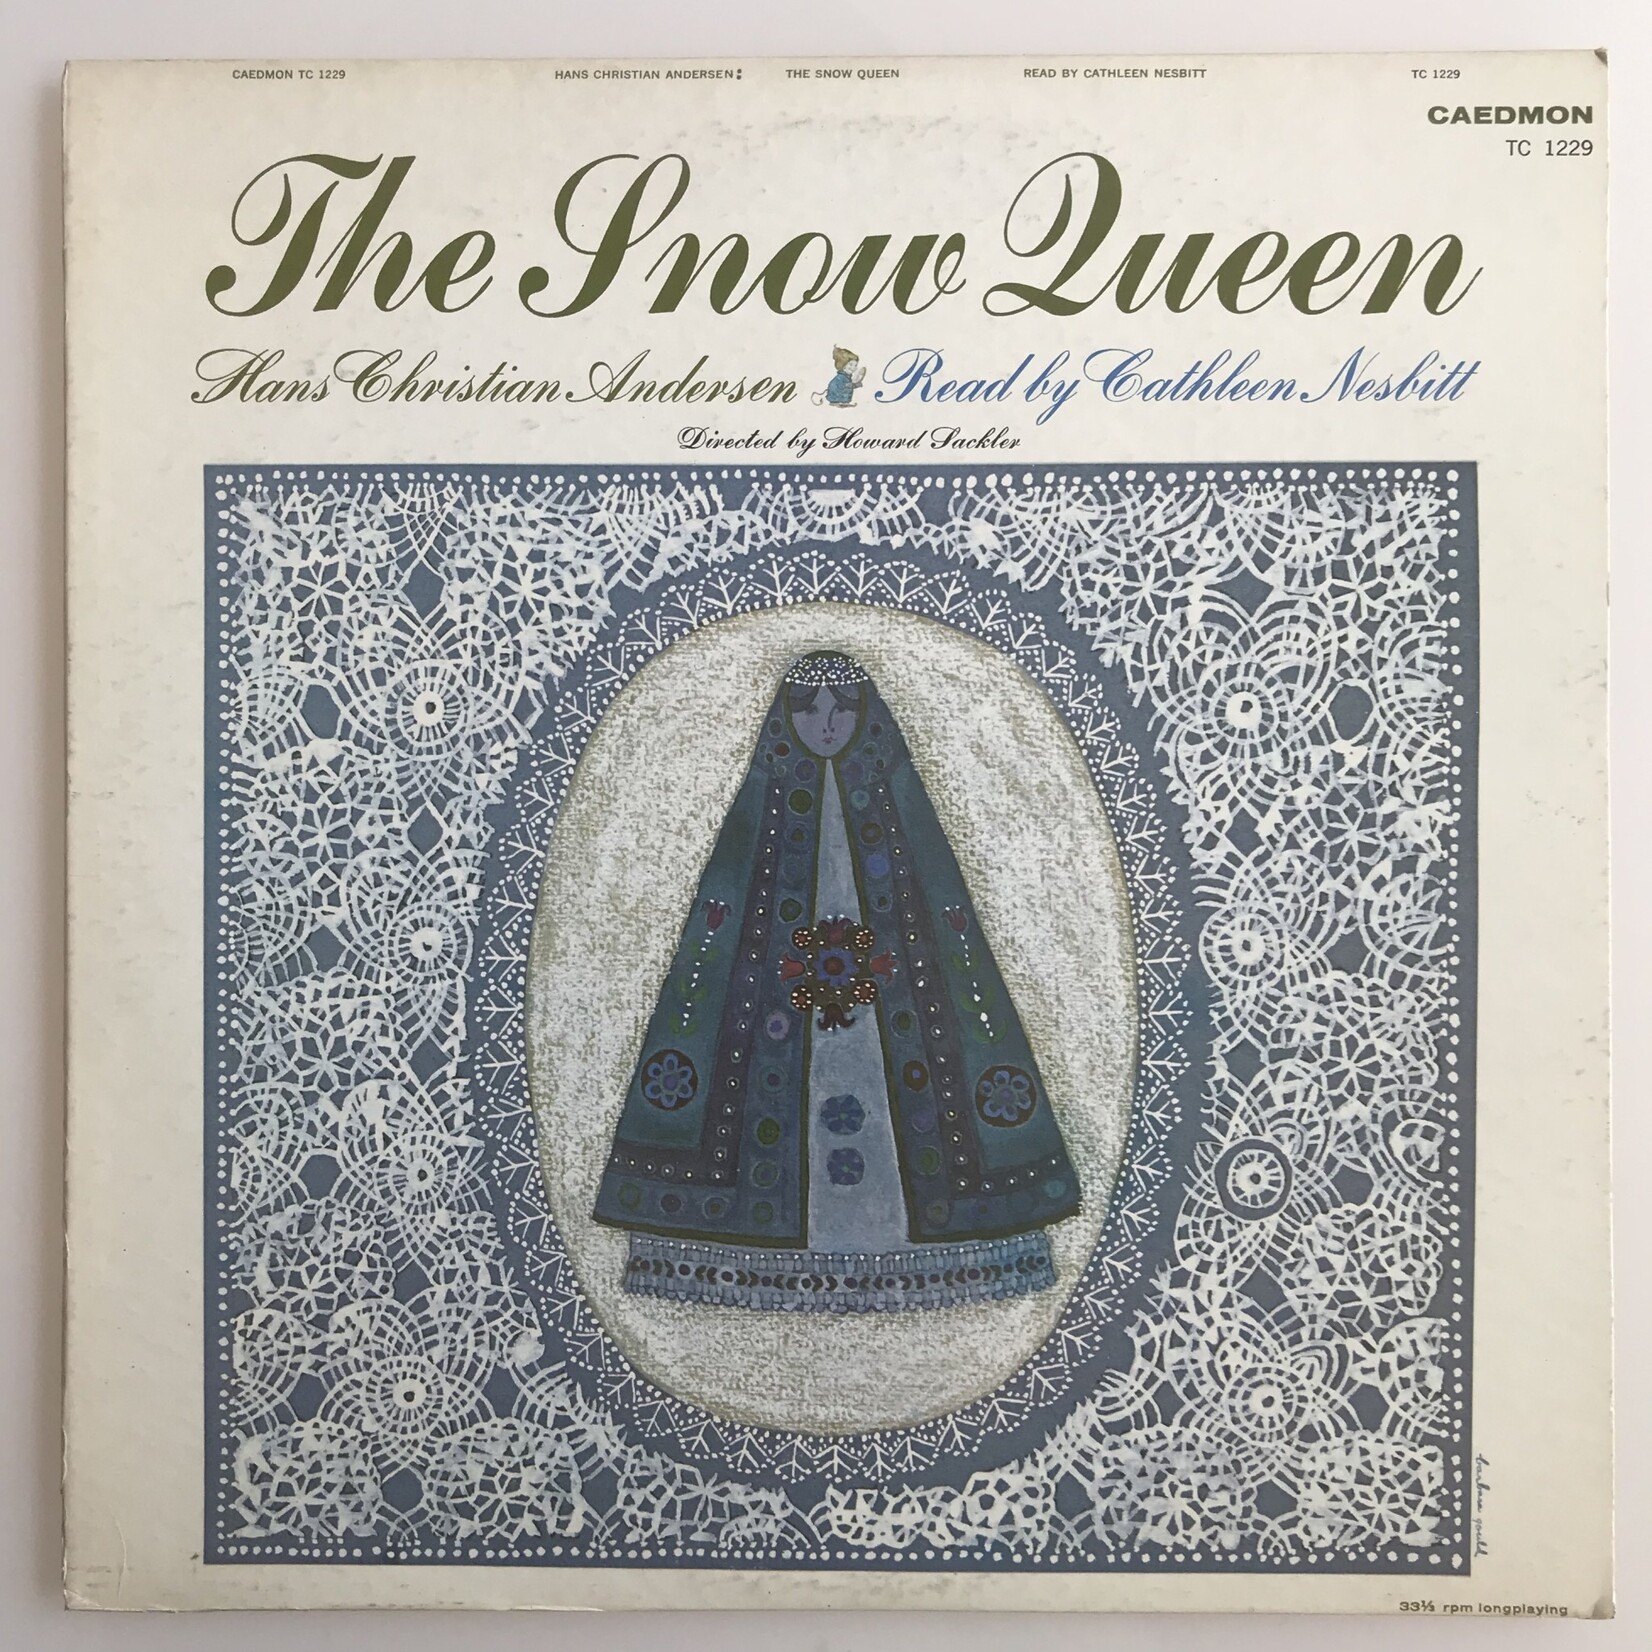 Cathleen Nesbit - Hans Christian Anderson: The Snow Queen - Vinyl LP (USED)